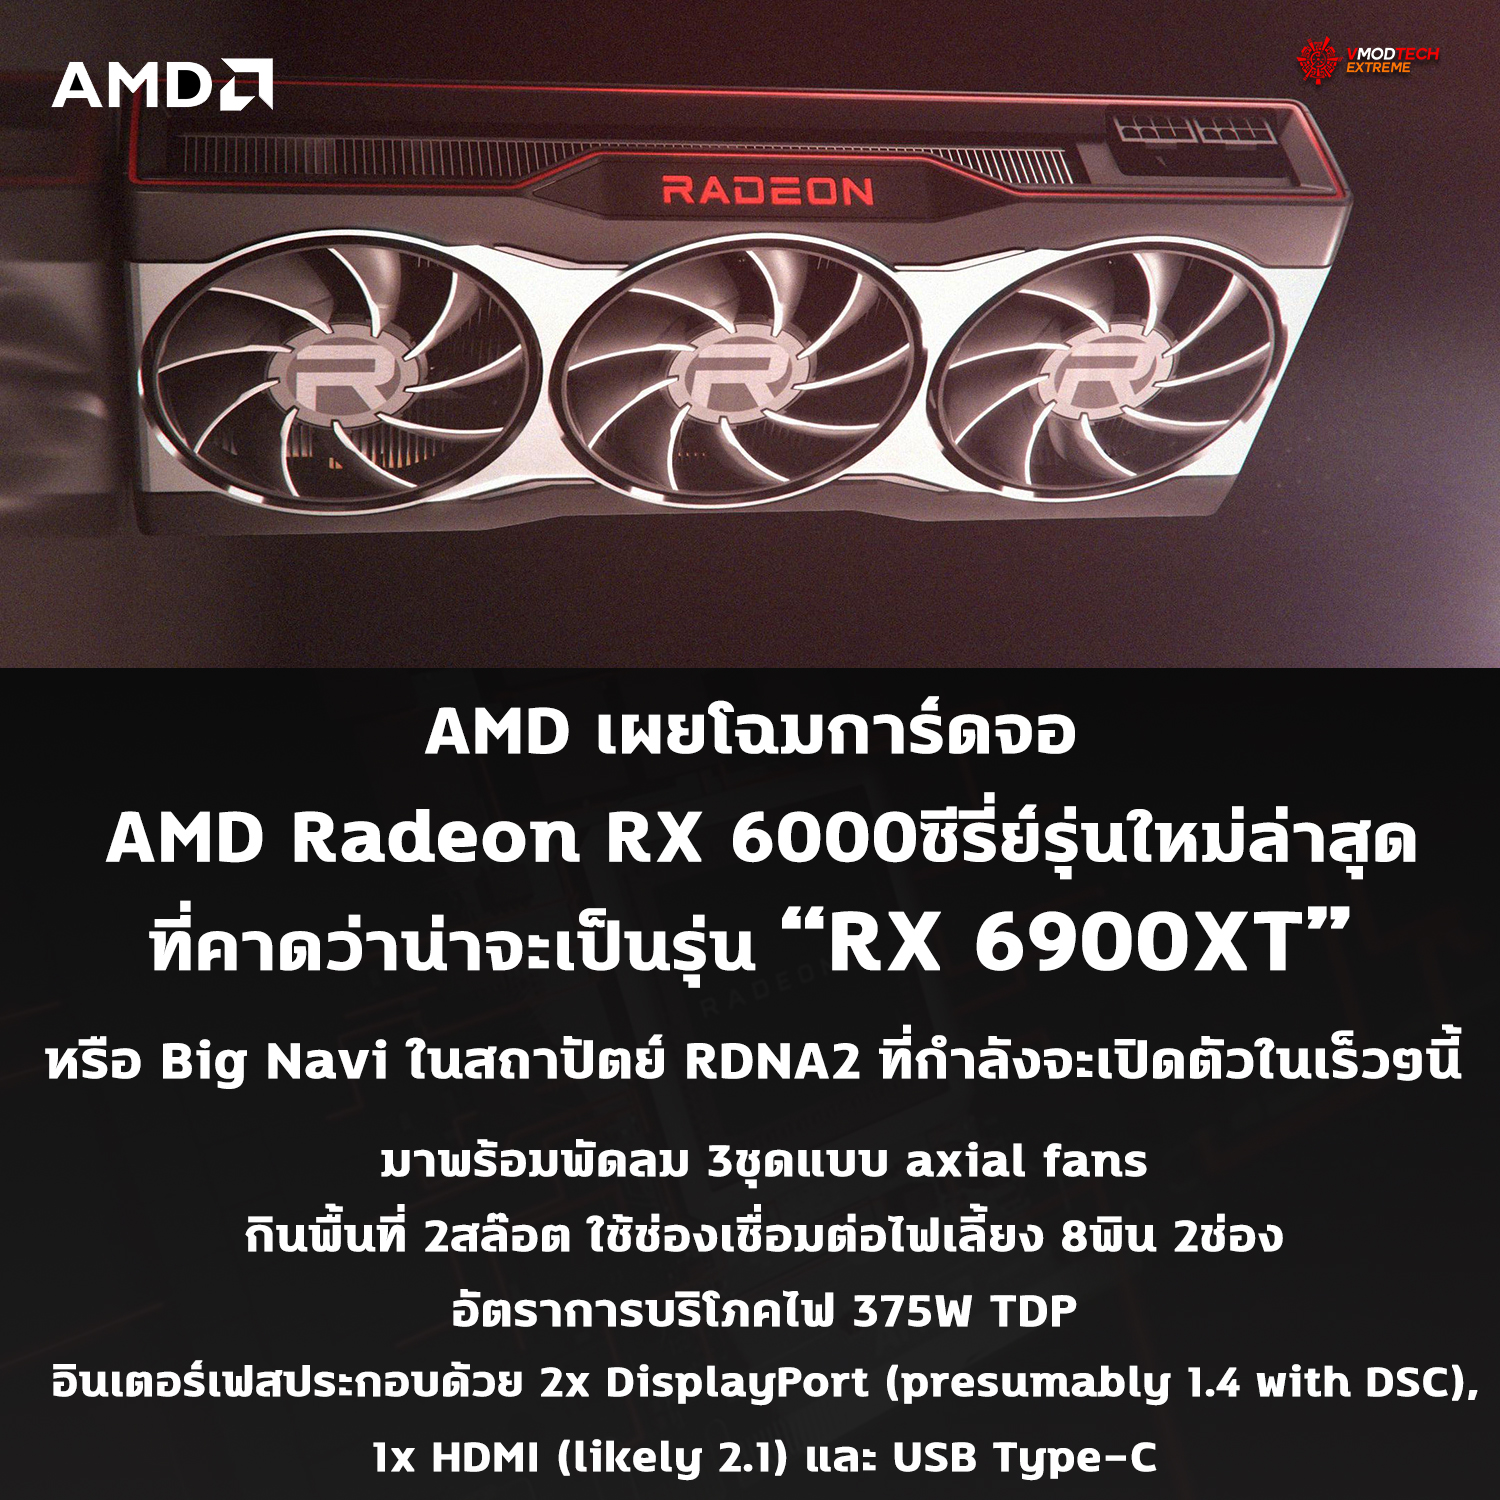 amd radeon rx 6000 big navi AMD เผยโฉมการ์ดจอ AMD Radeon RX 6000ซีรี่ย์รุ่นใหม่ล่าสุดที่คาดว่าน่าจะเป็นรุ่น RX 6900XT หรือ Big Navi ในสถาปัตย์ RDNA2 ที่กำลังจะเปิดตัวในเร็วๆนี้ 